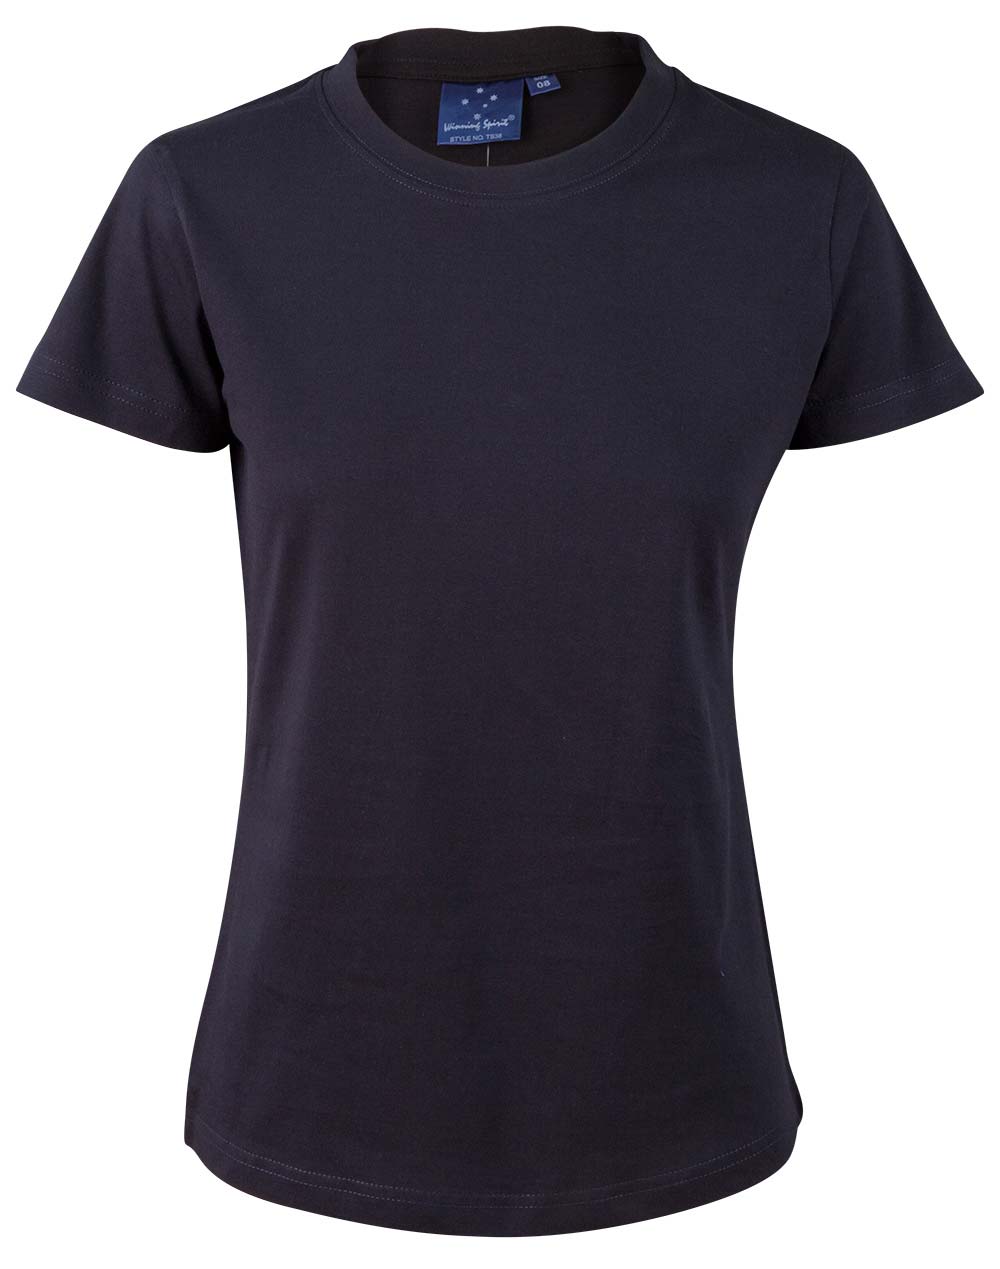 Women's cotton tee shirt navy